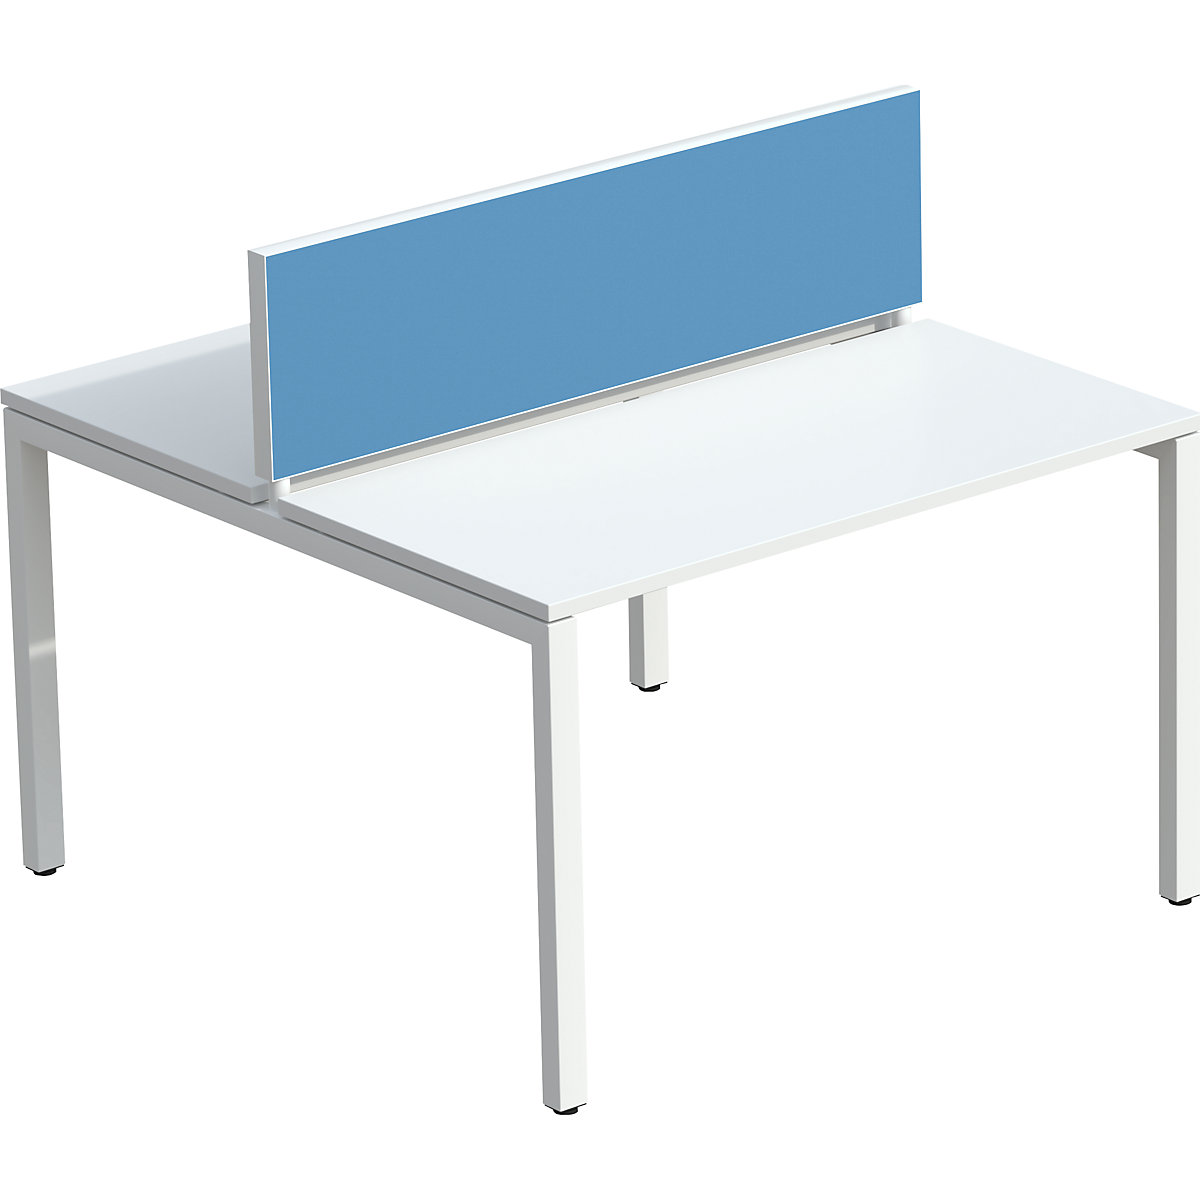 Table partition for team desks (Product illustration 19)-18